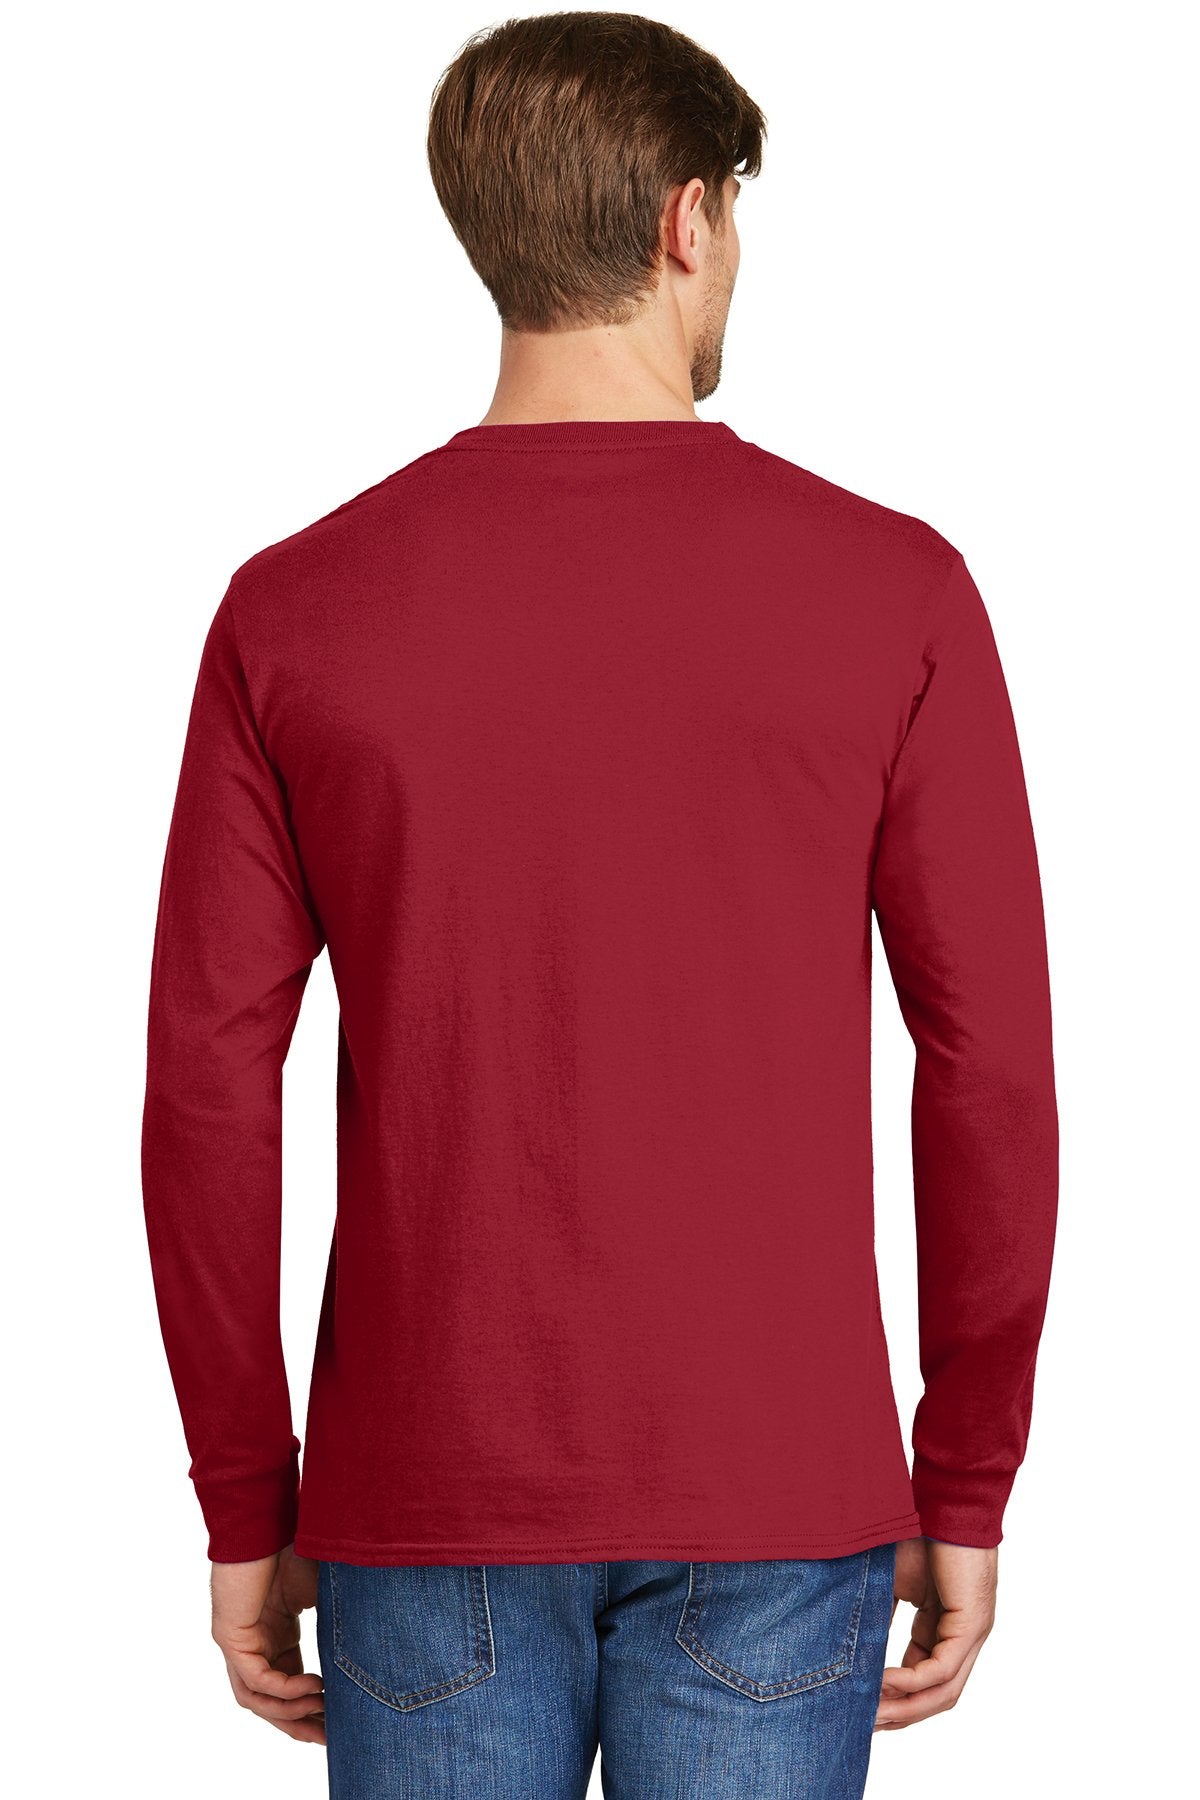 hanes tagless cotton long sleeve t shirt 5586 deep red